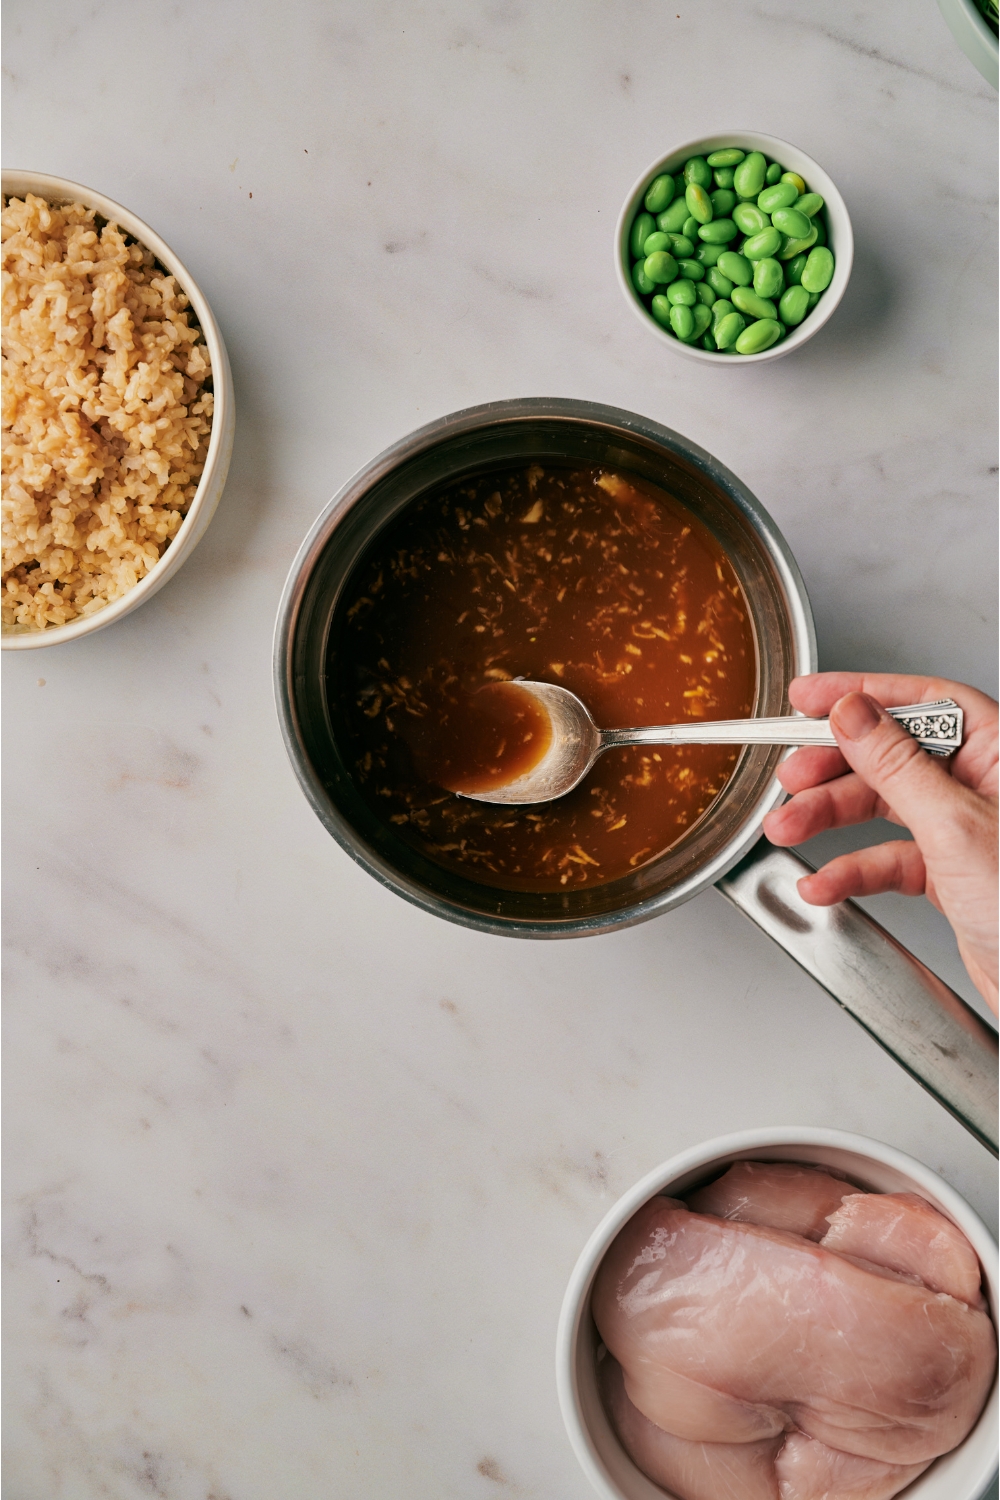 A hand stirring a pot of teriyaki sauce with a spoon.